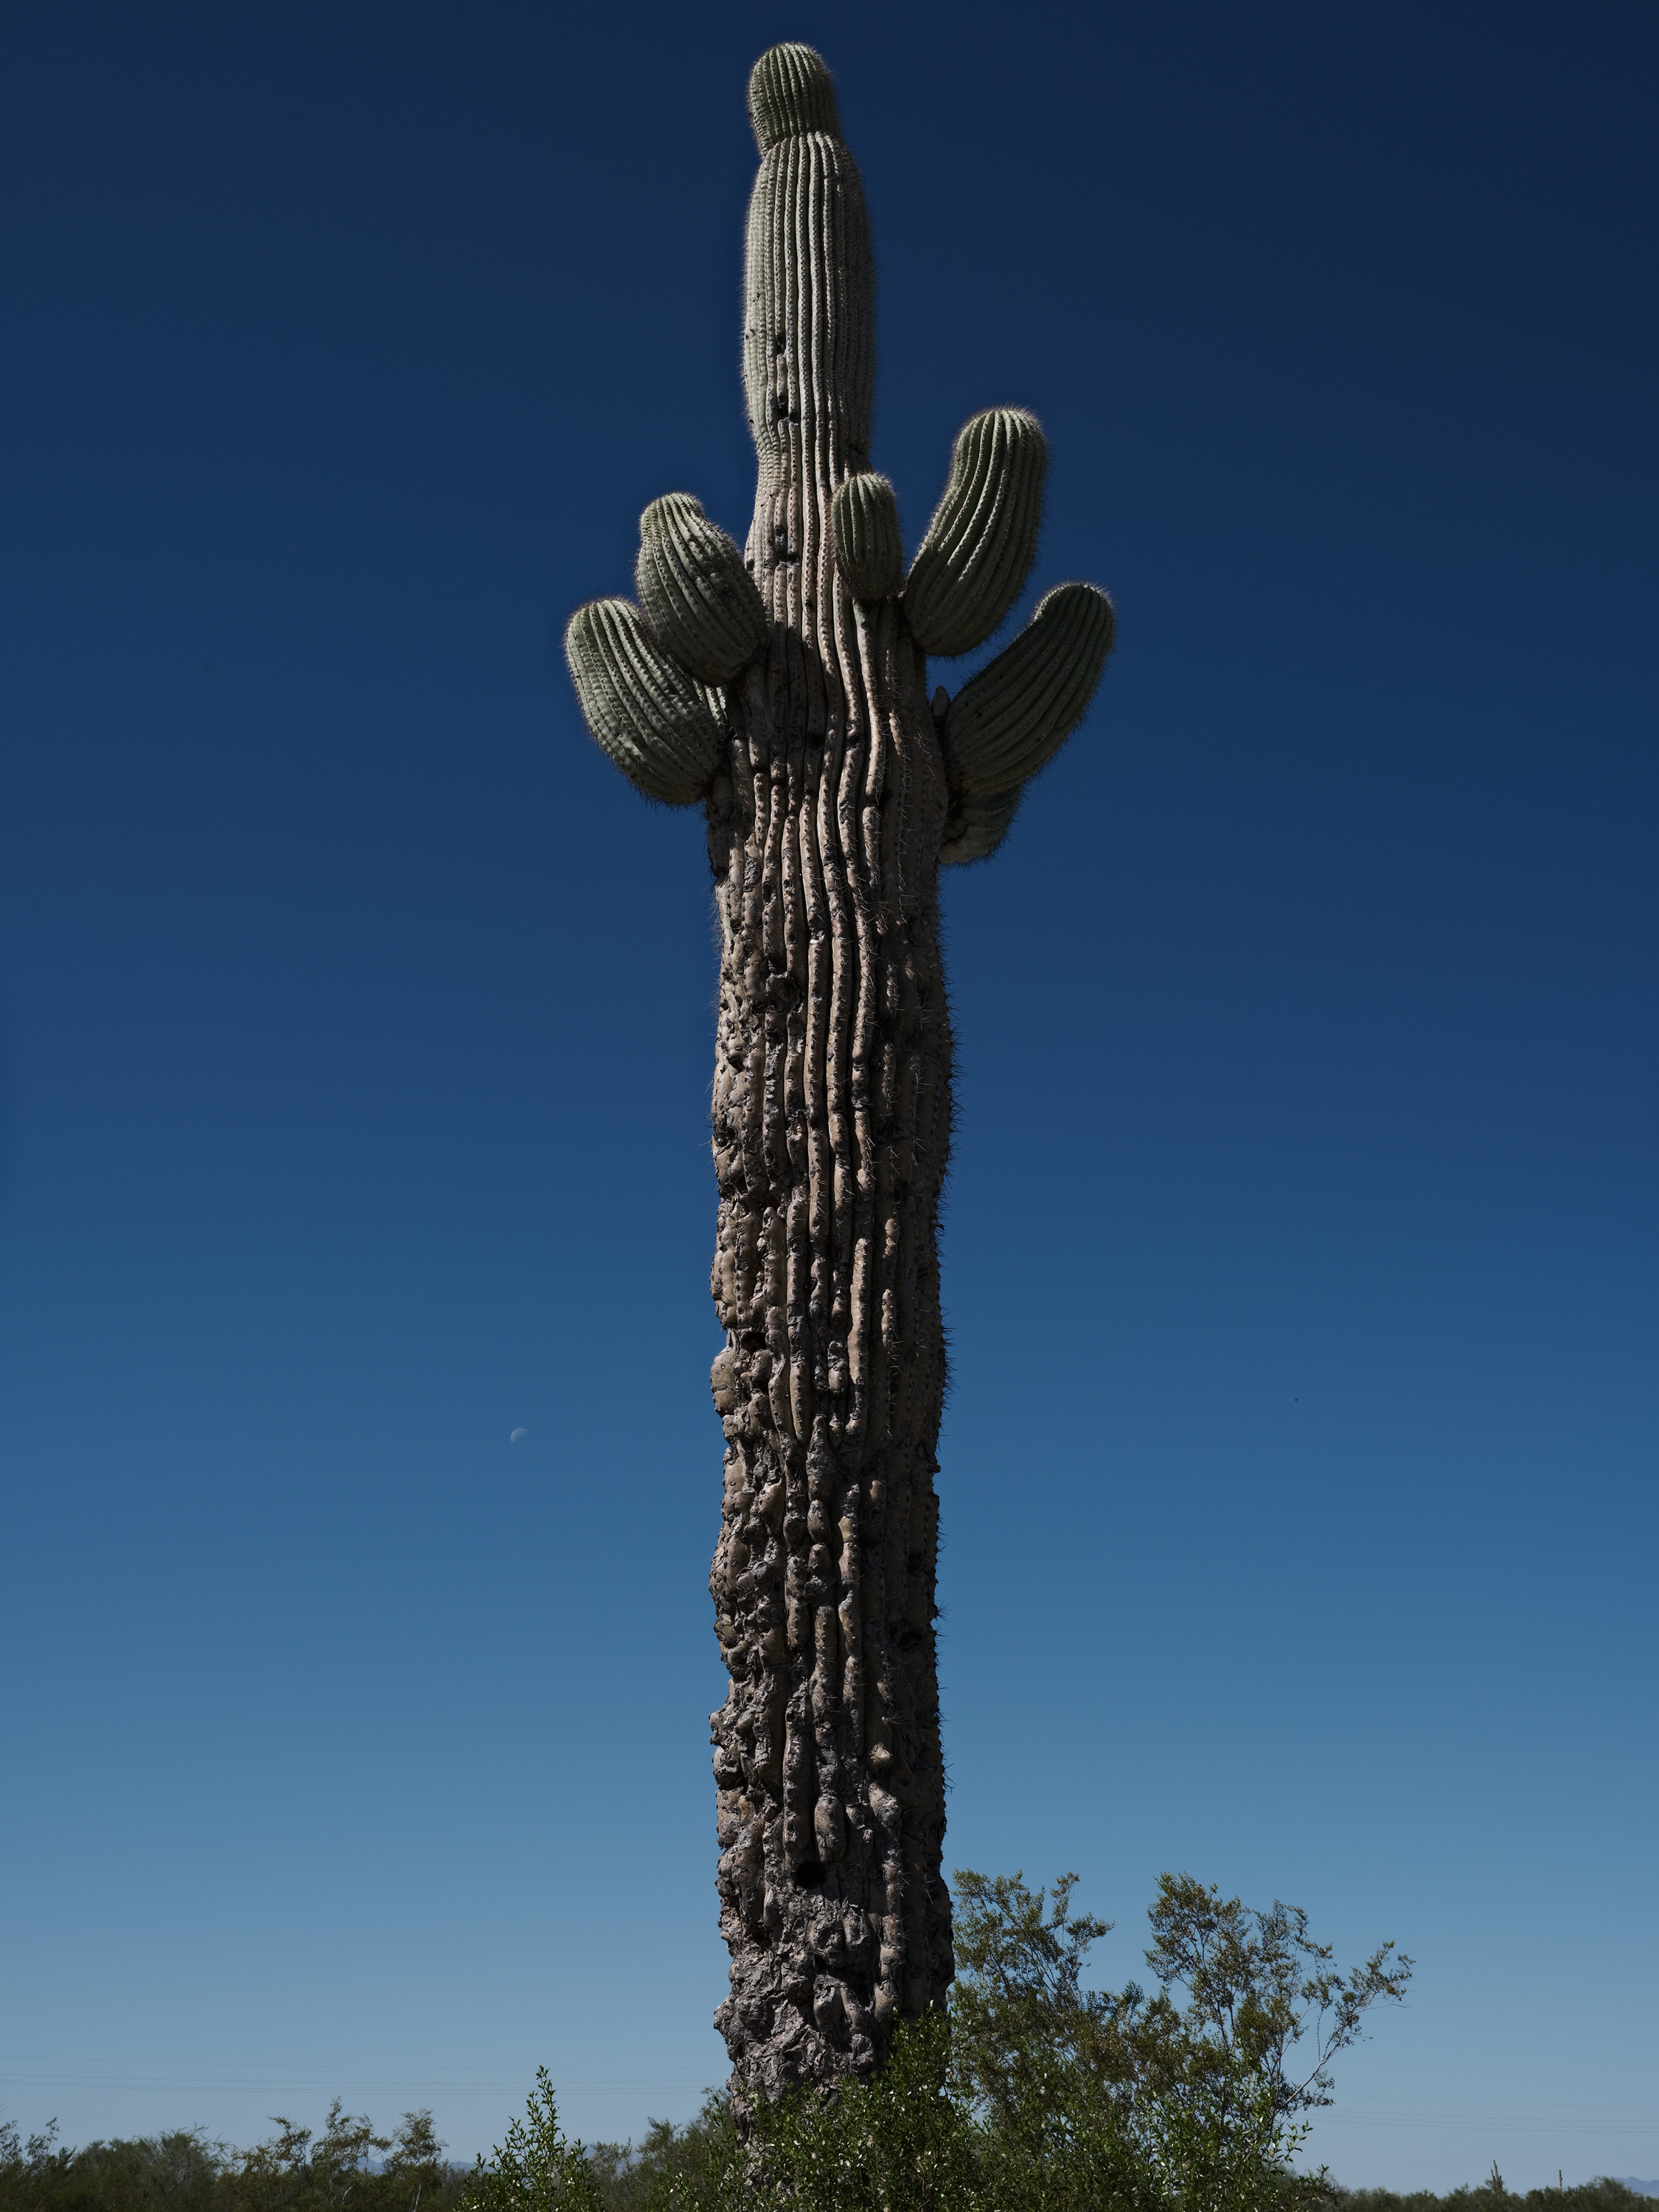 Photograph of a cactus